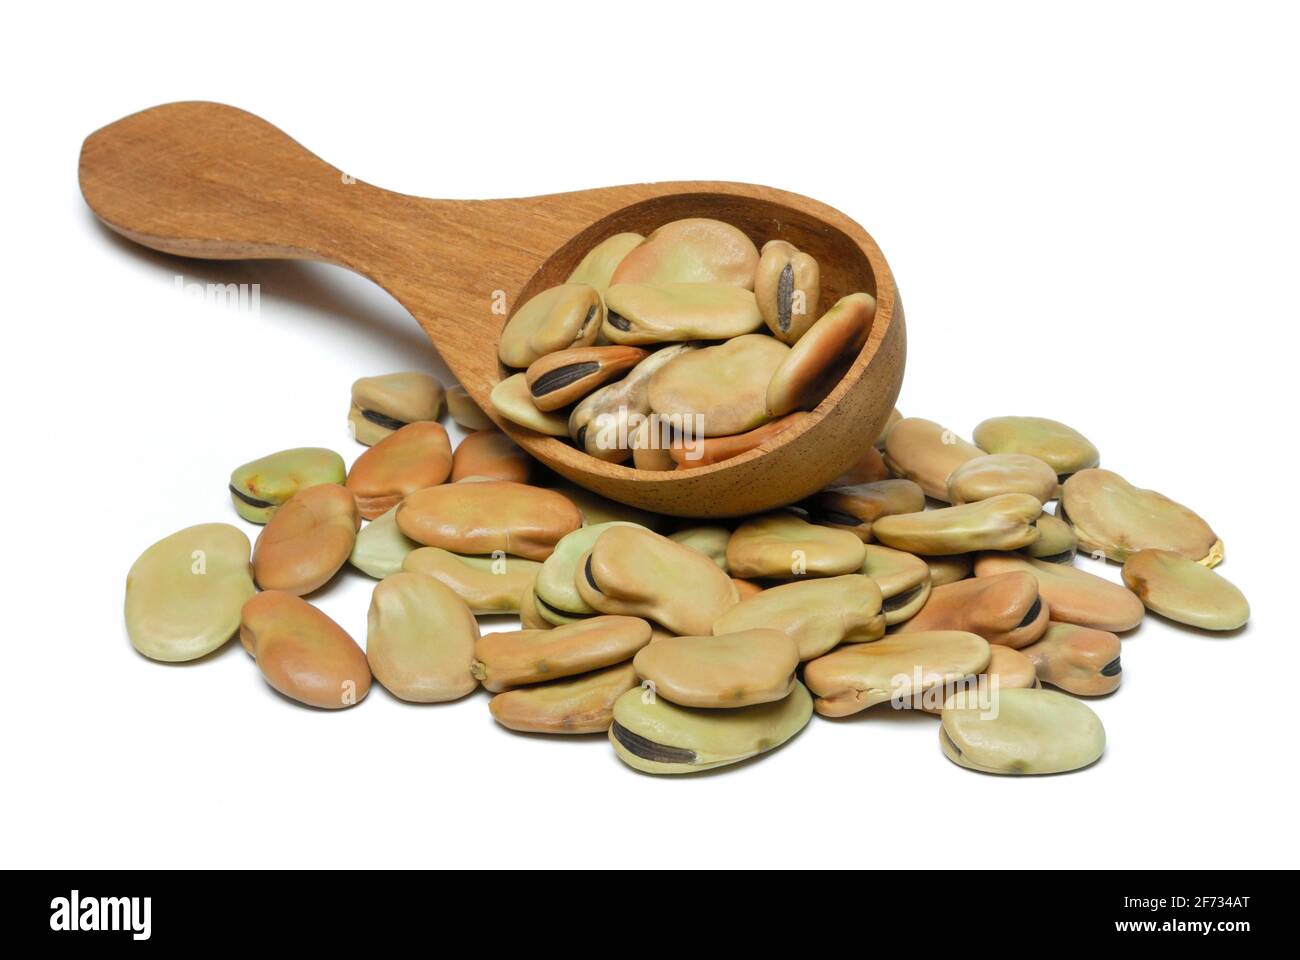 Dried fava beans ( Vicia faba) ,, broad bean, horse bean, broad be an, Stock Photo